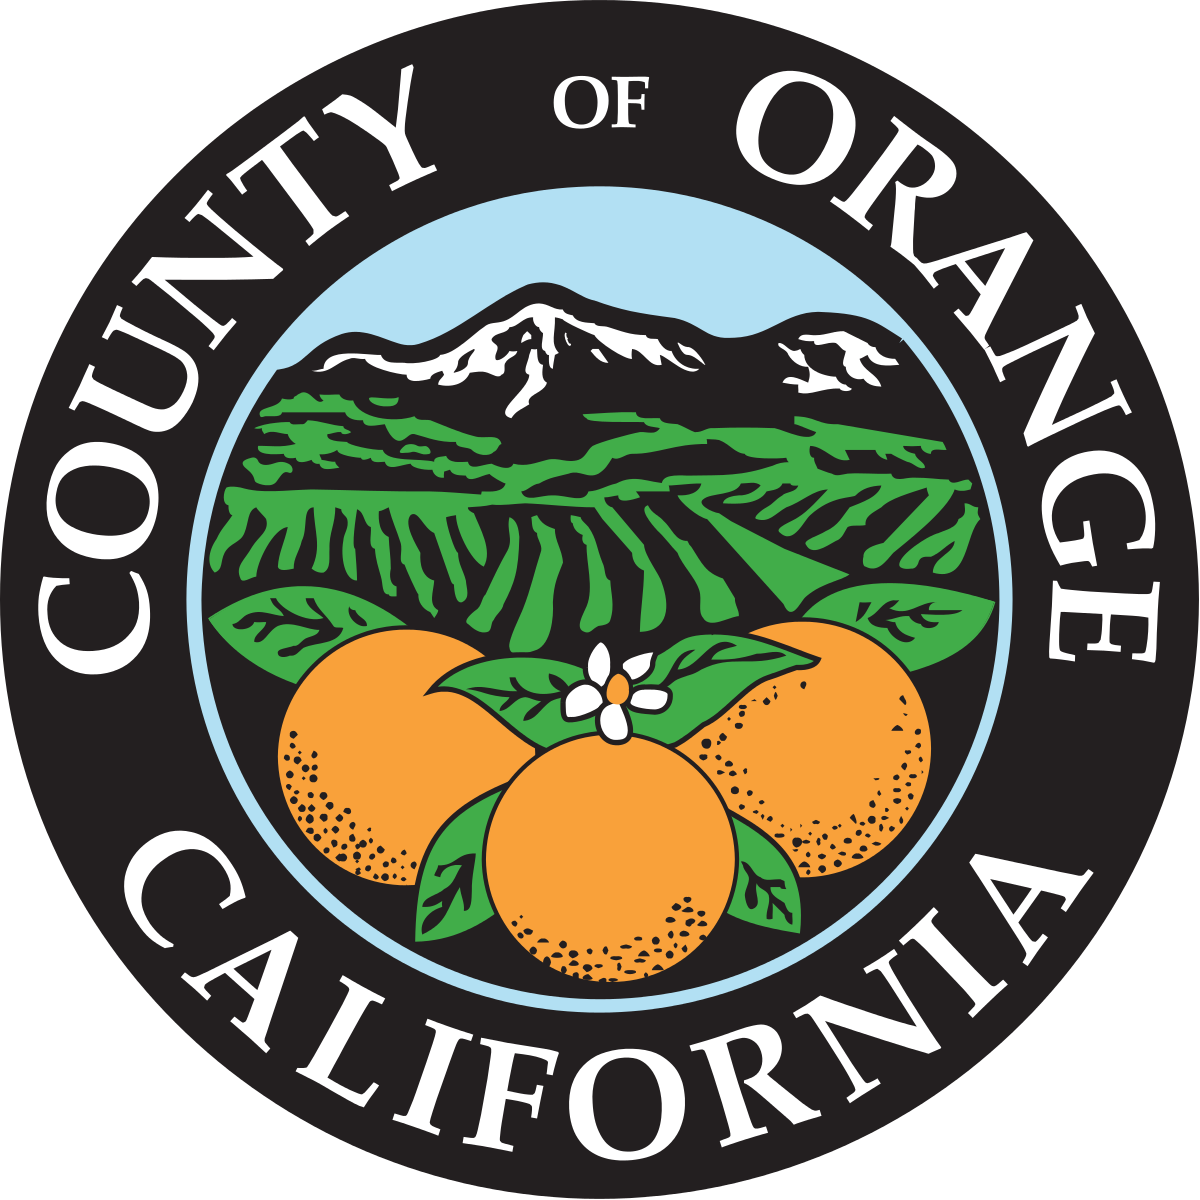 Clariti Customer Orange County California Webinar